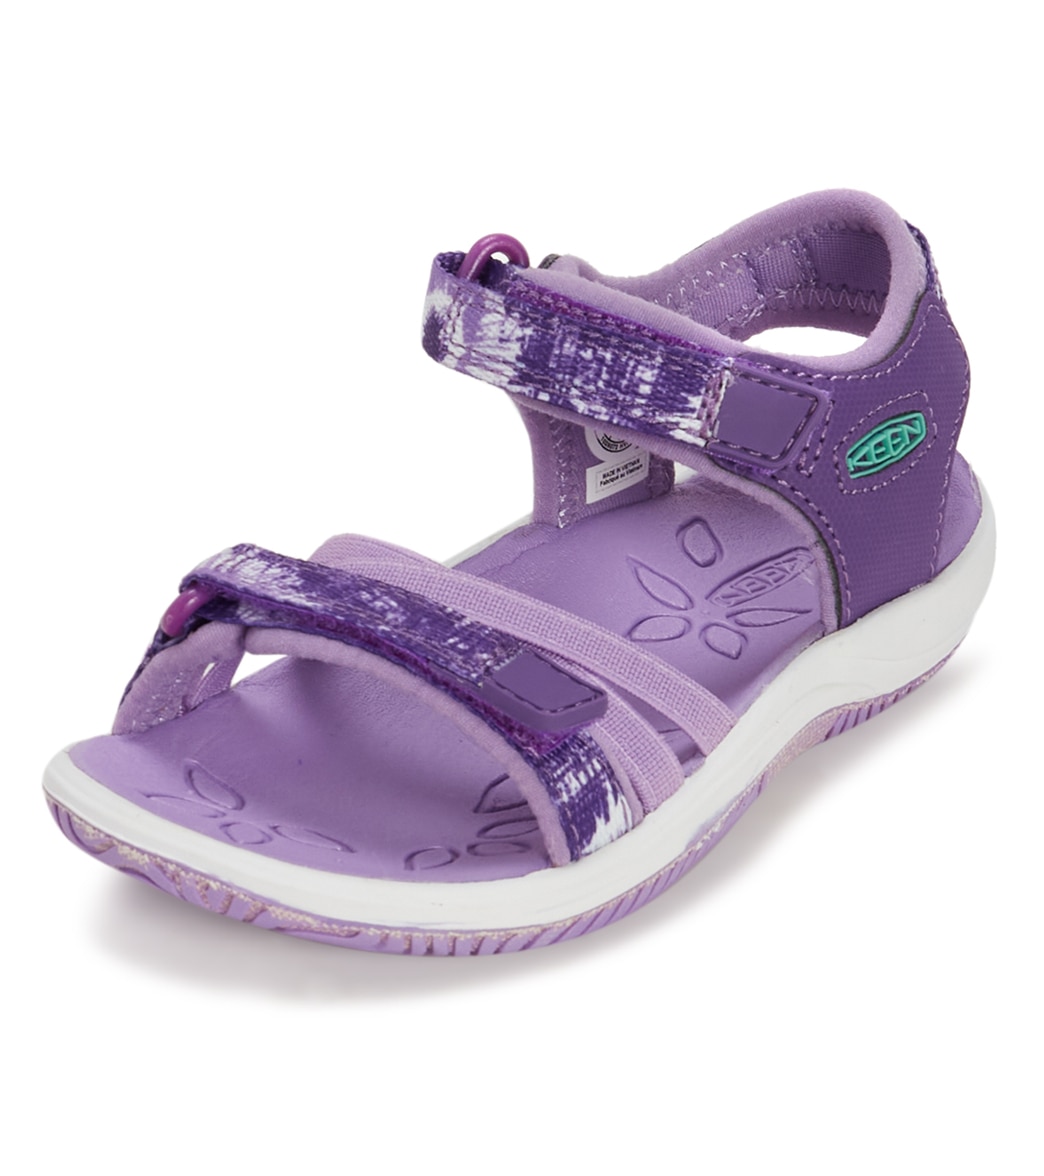 Keen Kids' Verano Sandals - Tillandsia Purple/English Lavender 1 Big - Swimoutlet.com